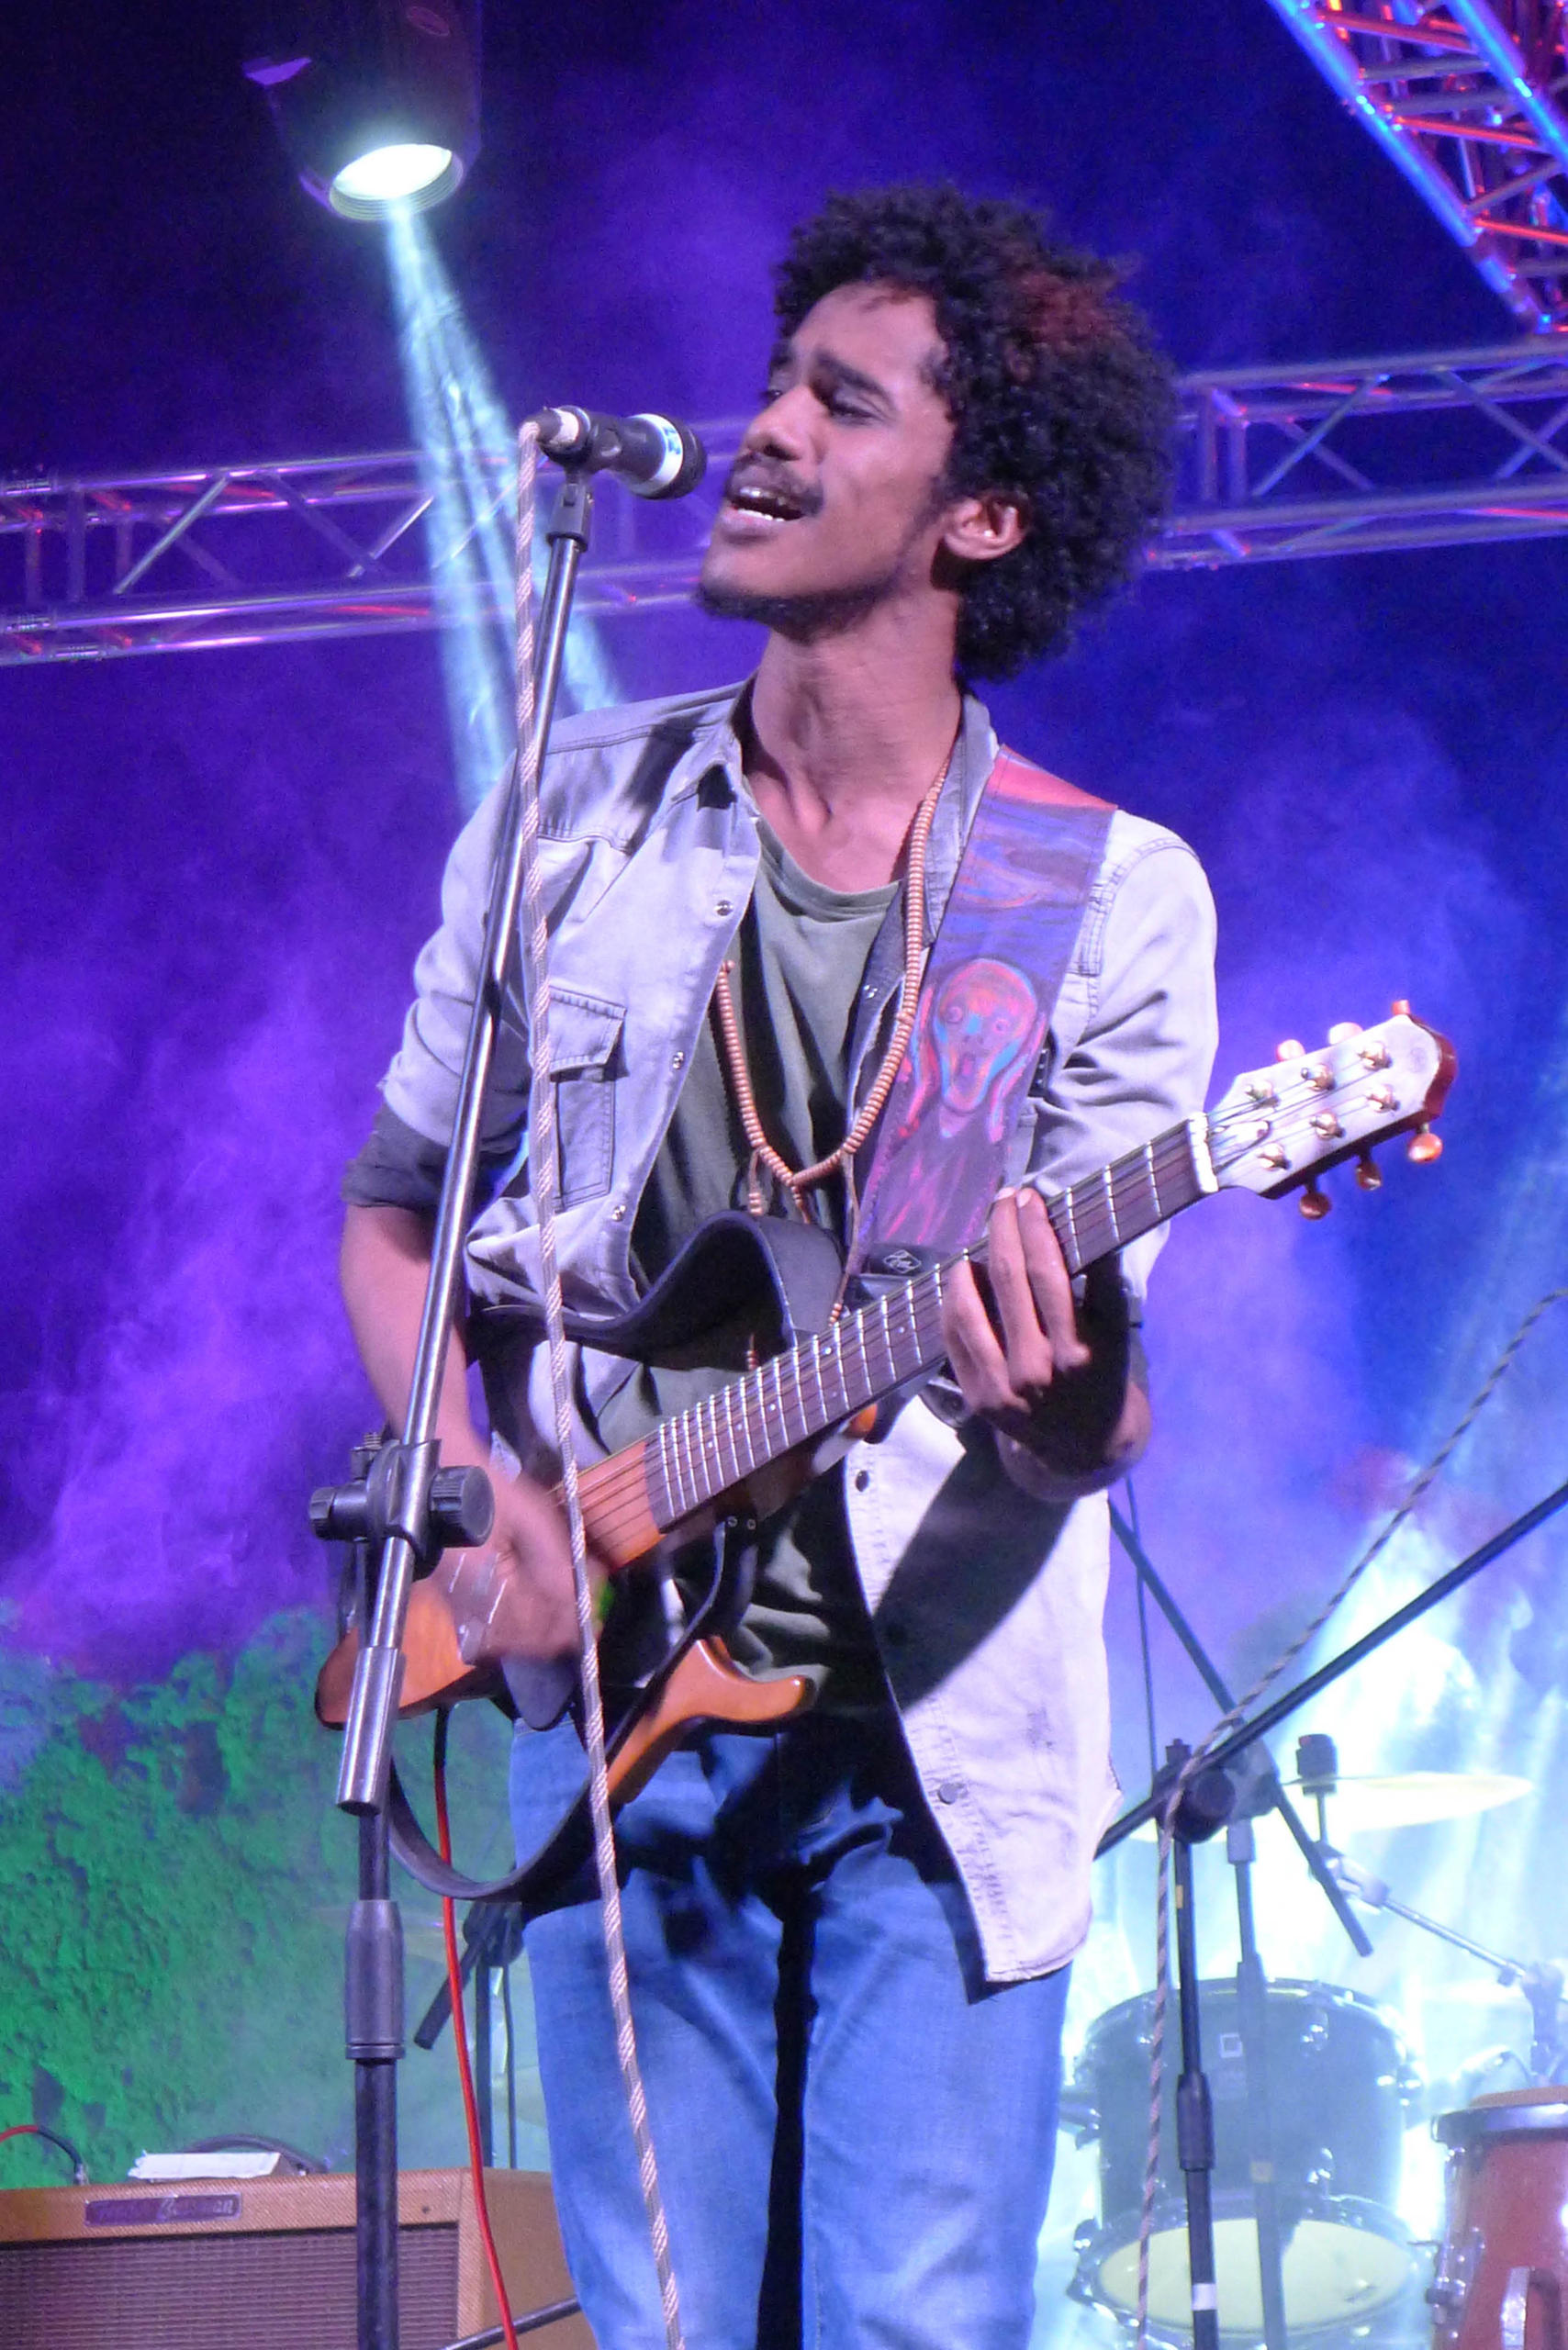 Ibrahim Ibnalbadaya, Sänger und Leader der Gruppe Aswat Almadina